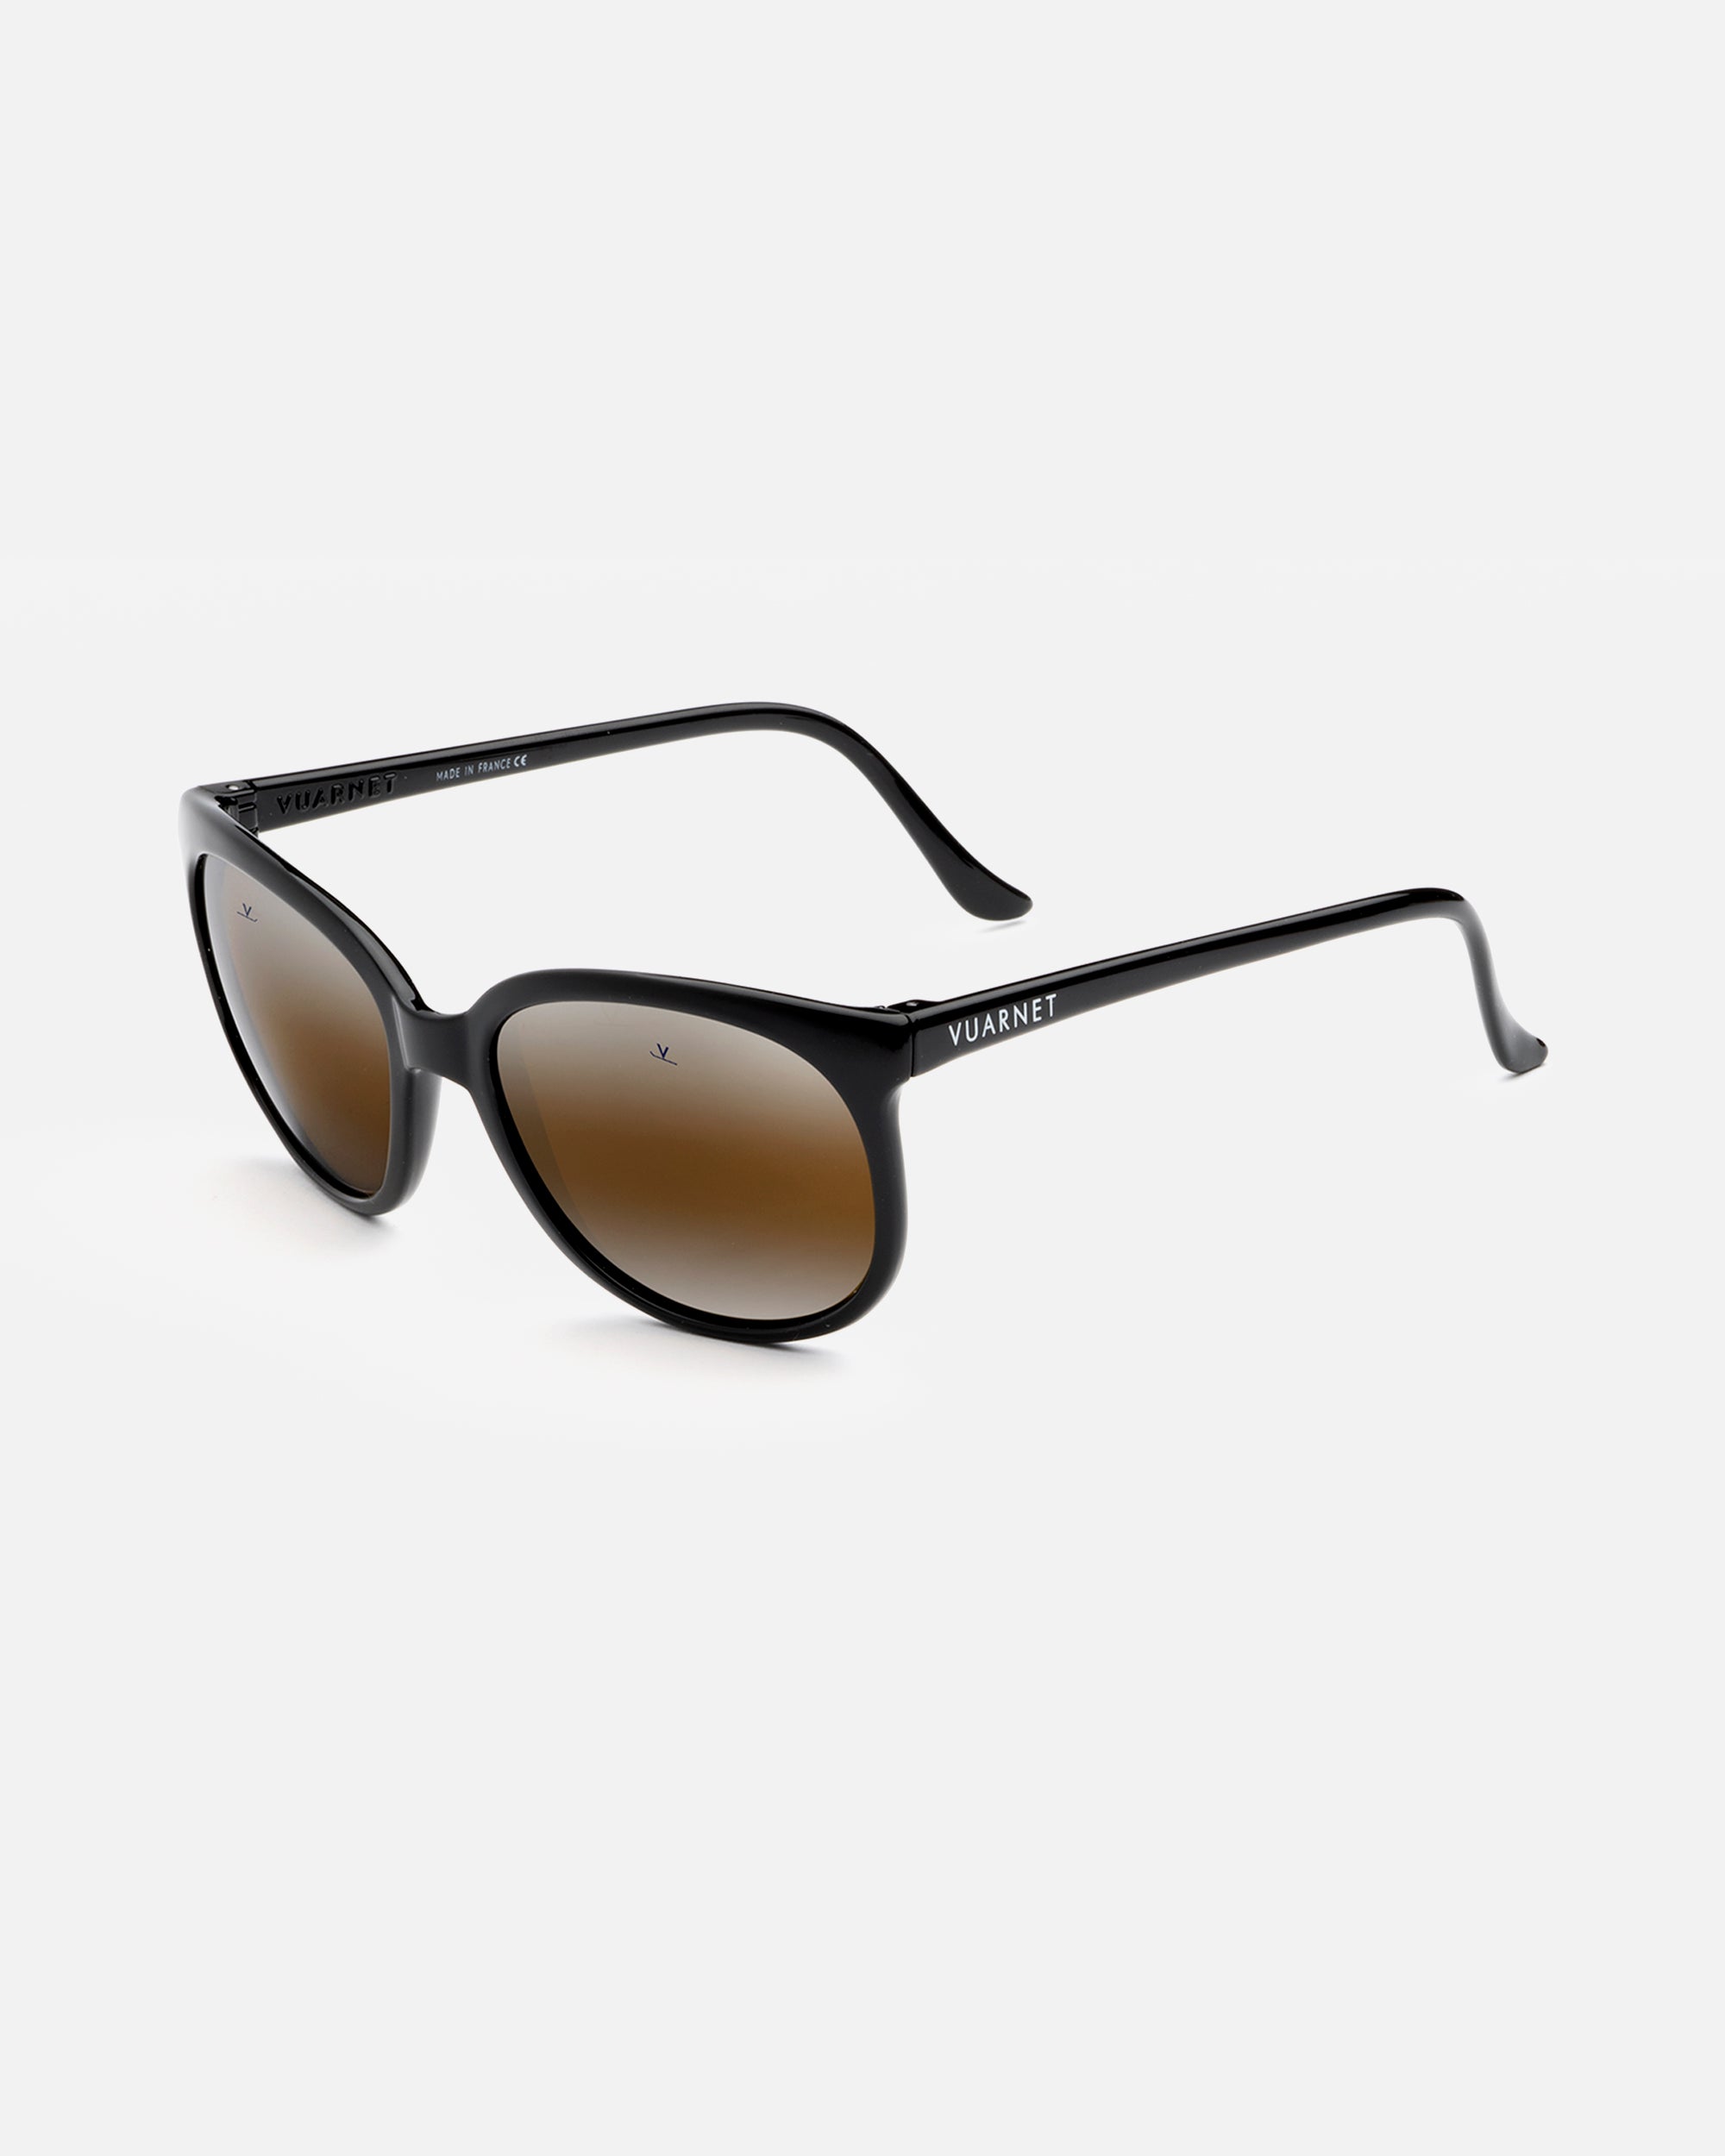 Vuarnet Black LEGEND 02 ORIGINALS Lifestyle Sunglasses